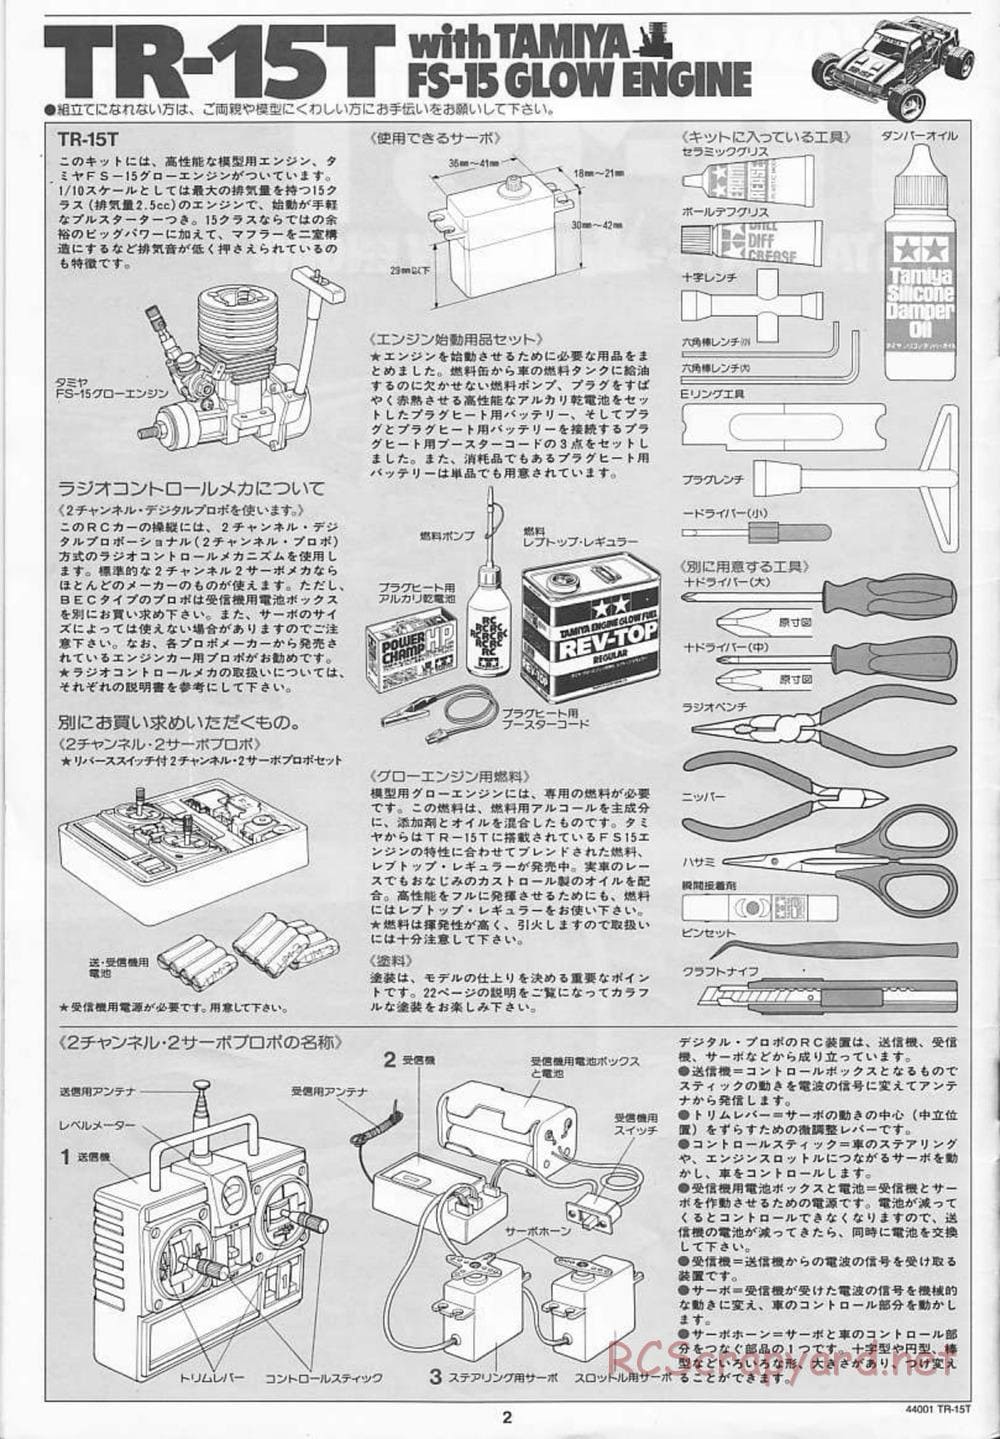 Tamiya - Stadium Racing Truck TR-15T Chassis - Manual - Page 2